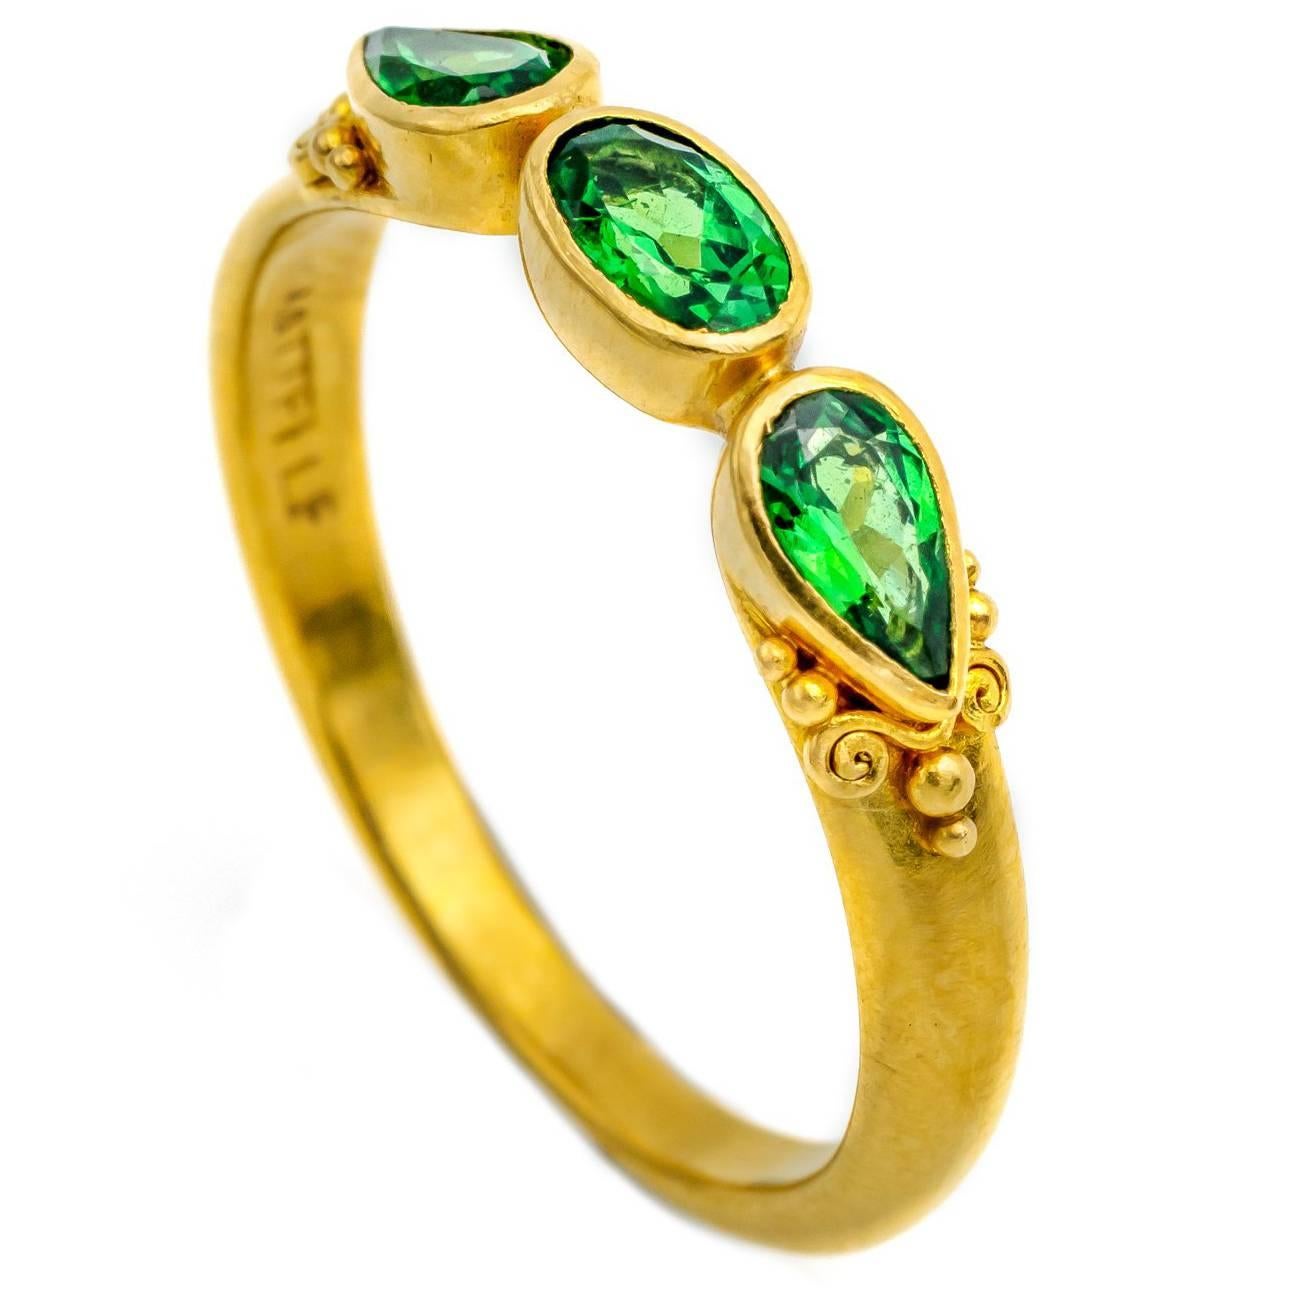 Oval and Pear Tsavorite Green Garnet Ring in 18 Karat Gold with Granulation